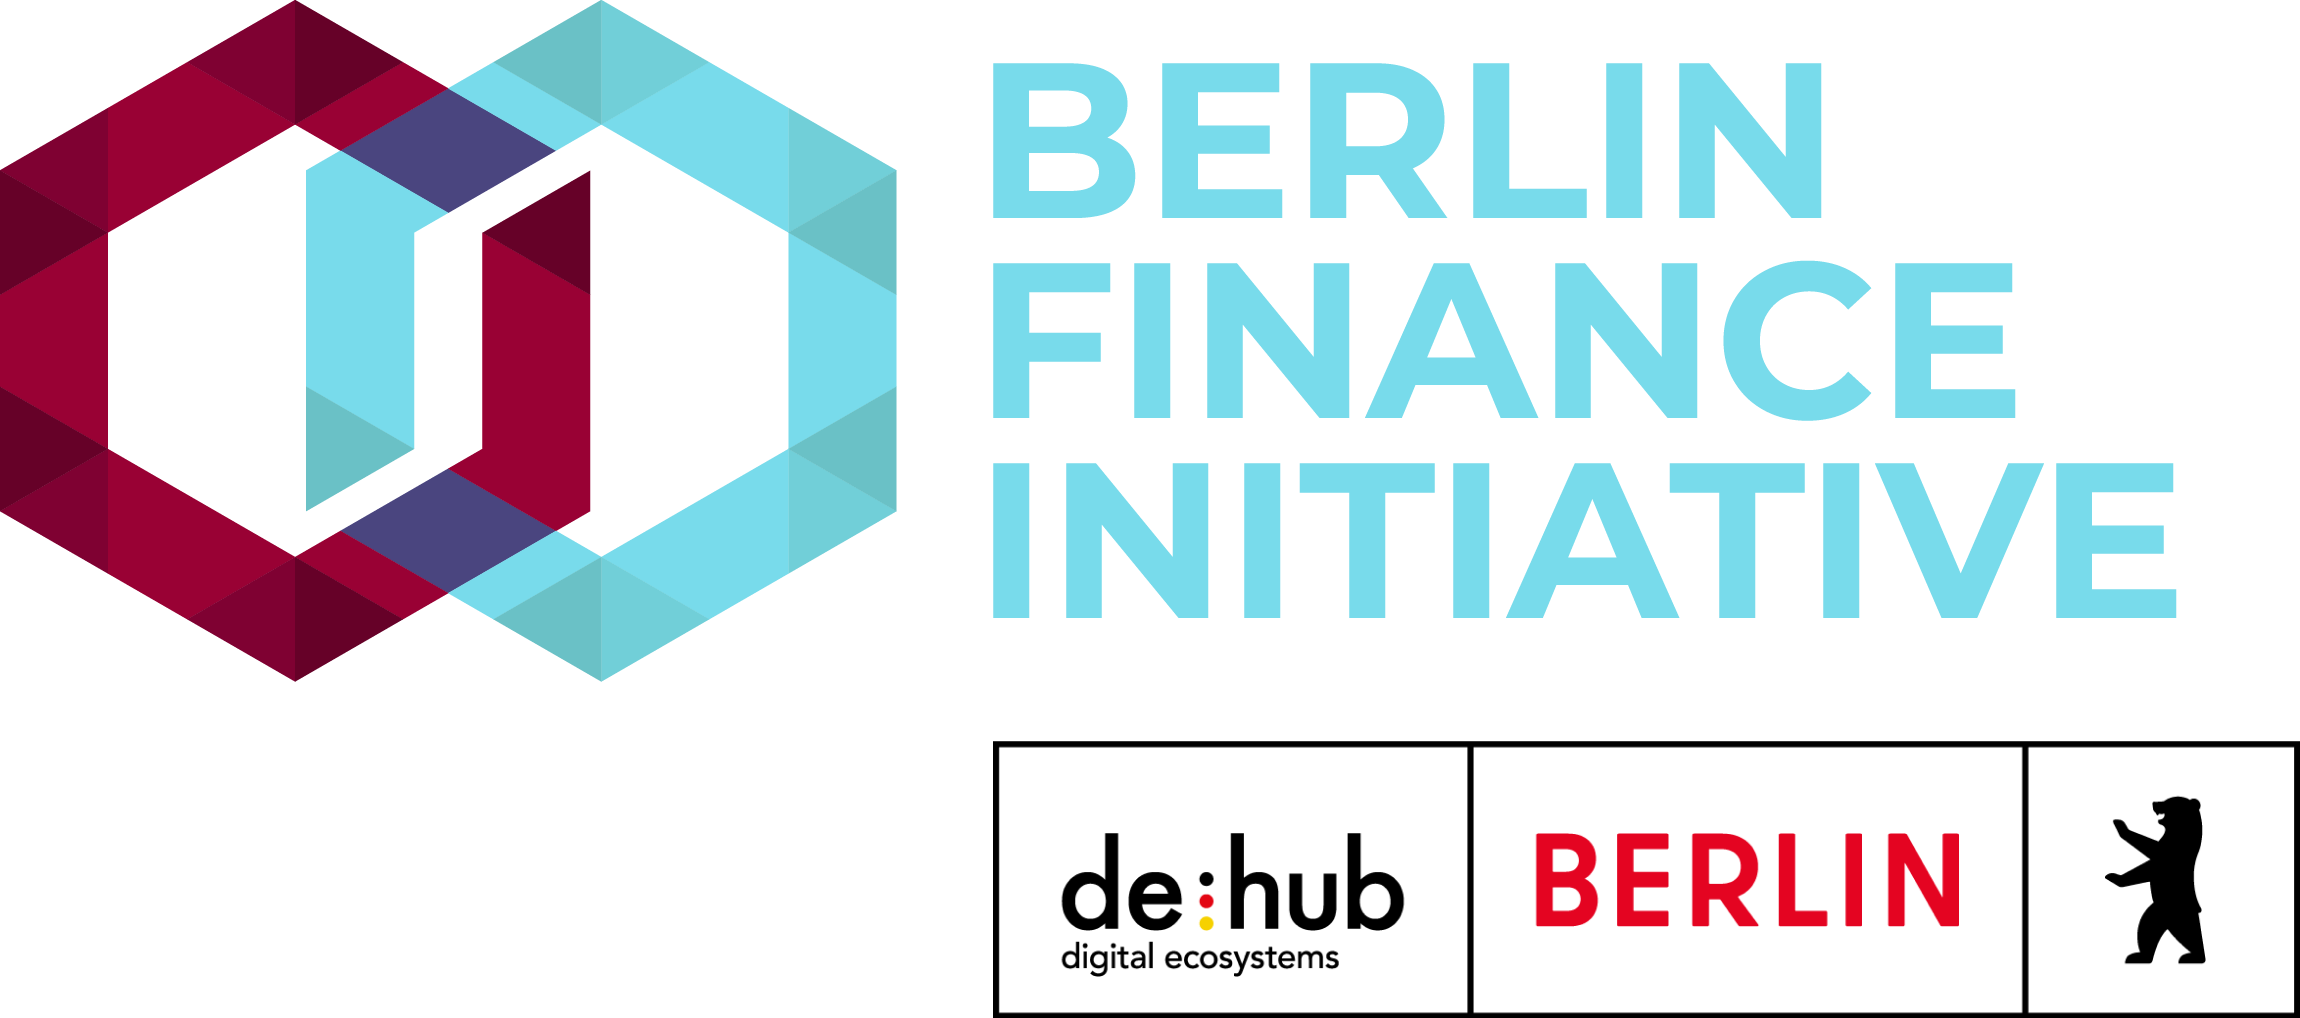 Berlin Finance Initiative